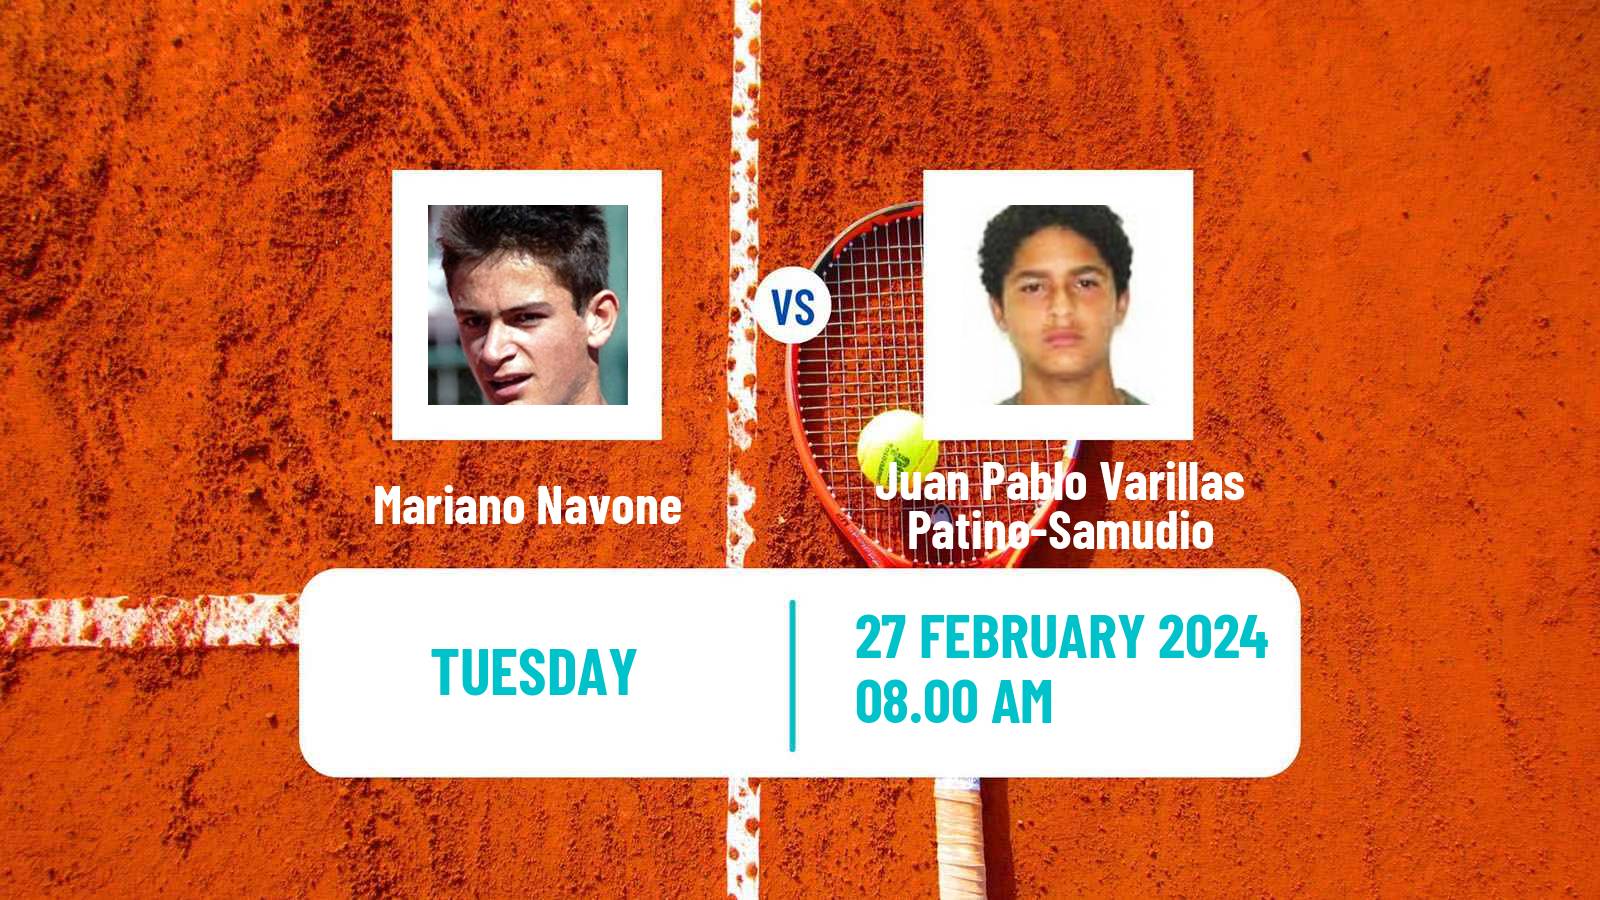 Tennis ATP Santiago Mariano Navone - Juan Pablo Varillas Patino-Samudio